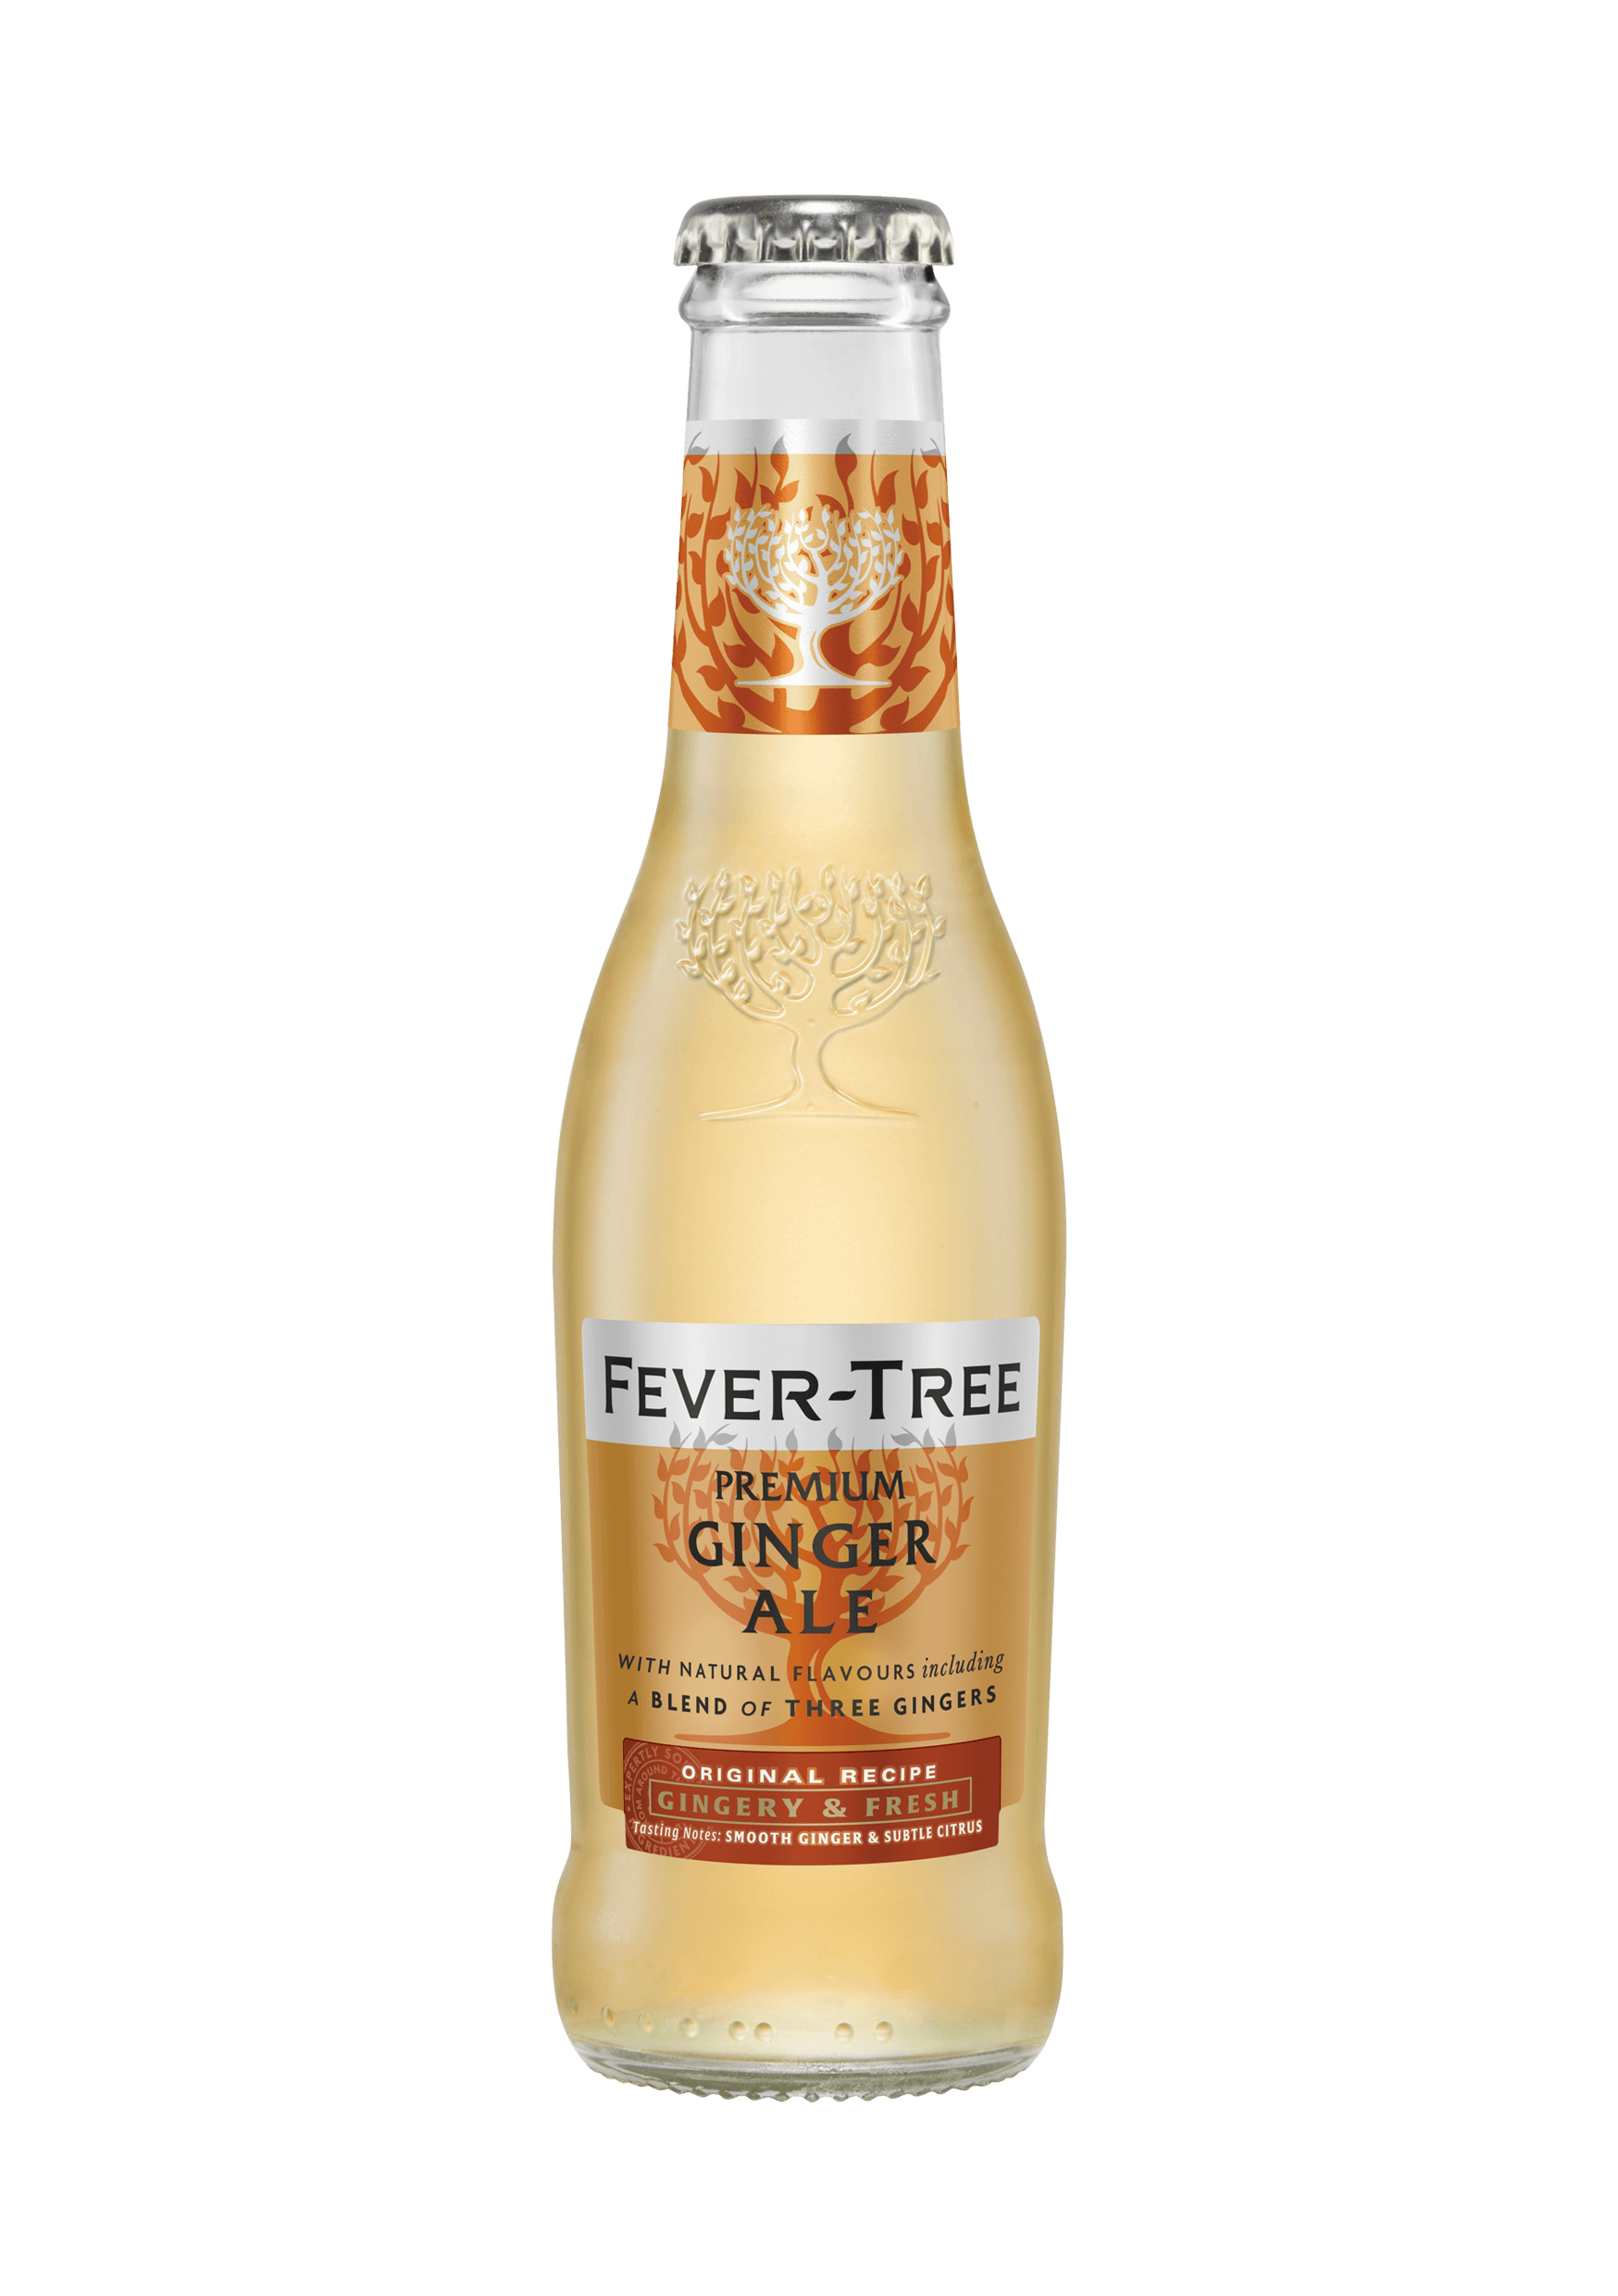 Fevertree Ginger Ale